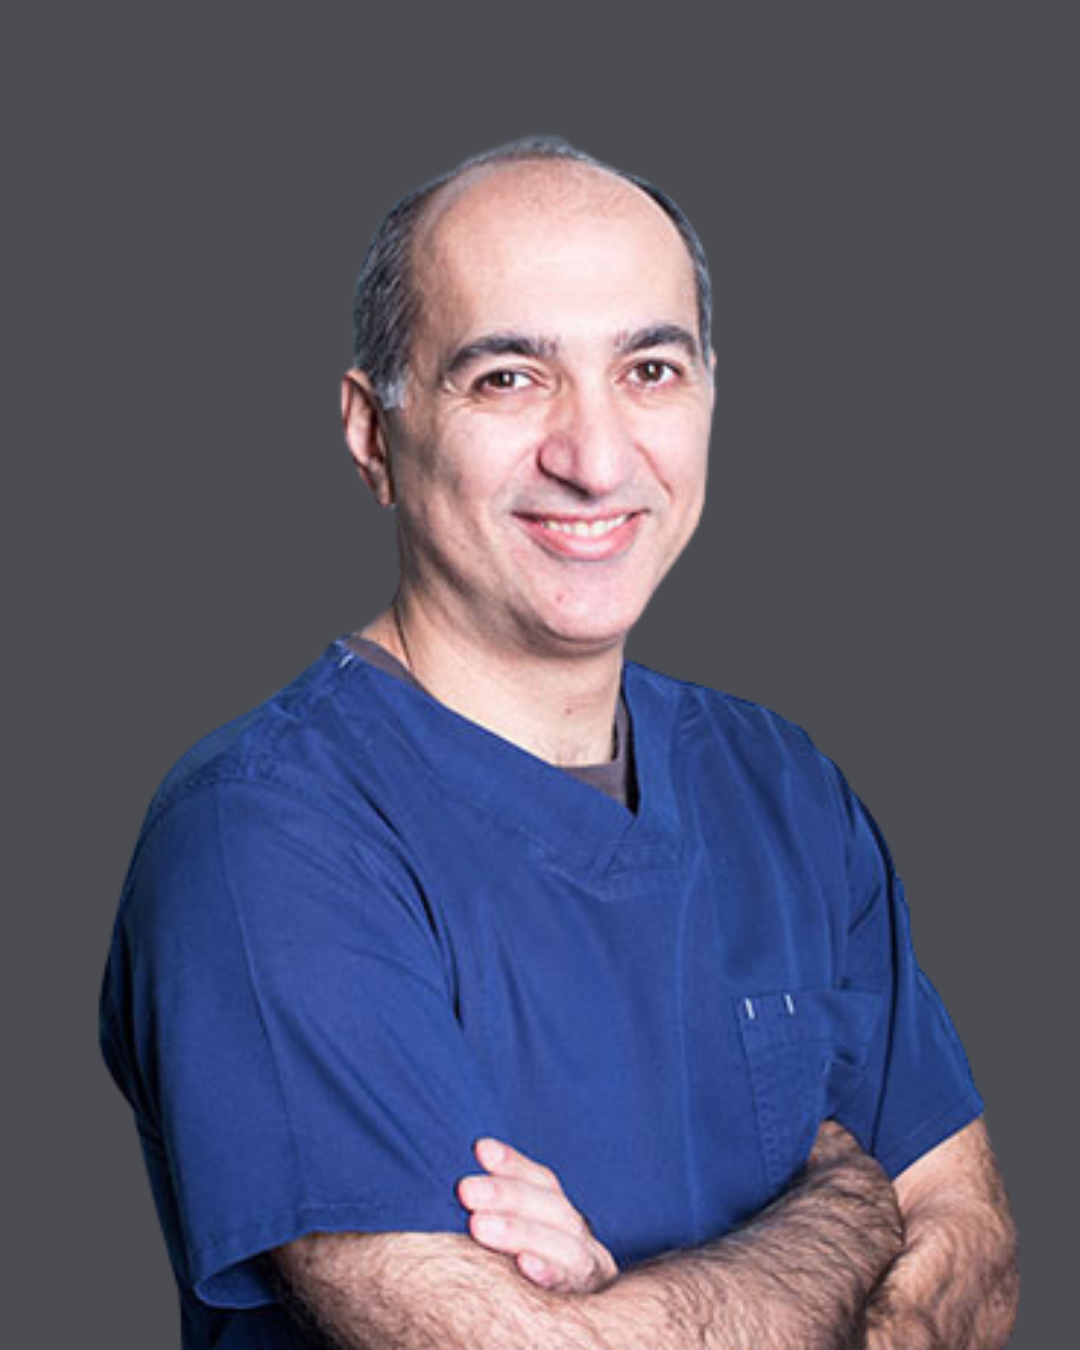 Dr. Mohammad Moshtaghi